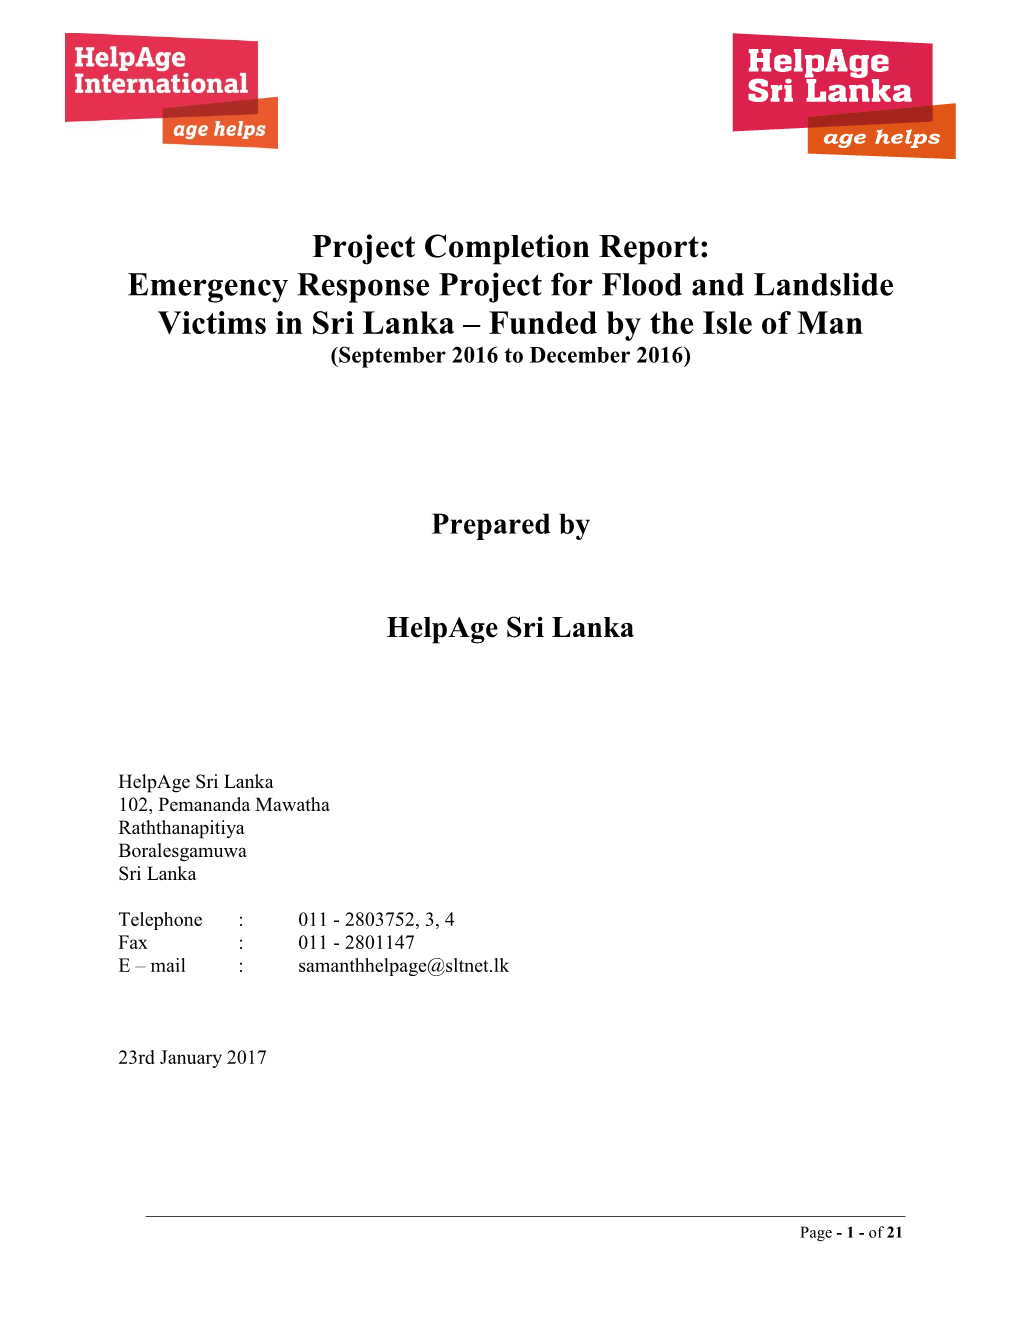 Helpage International EMR037.16 Report